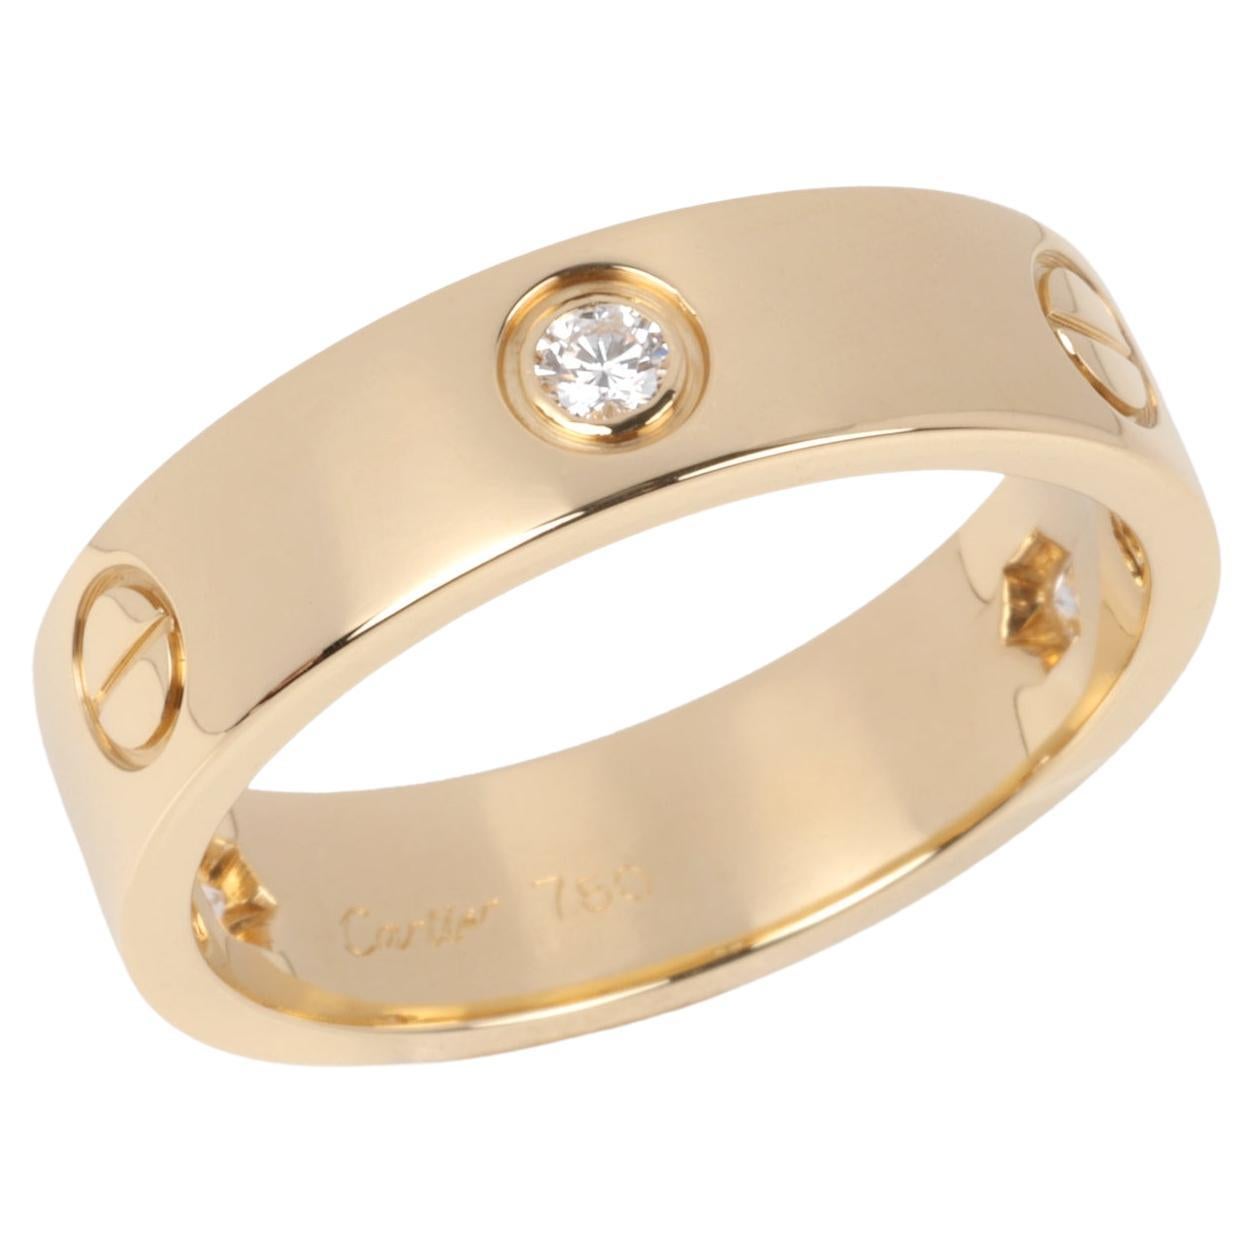 Cartier 3 Diamond 18ct Yellow Gold Love Ring